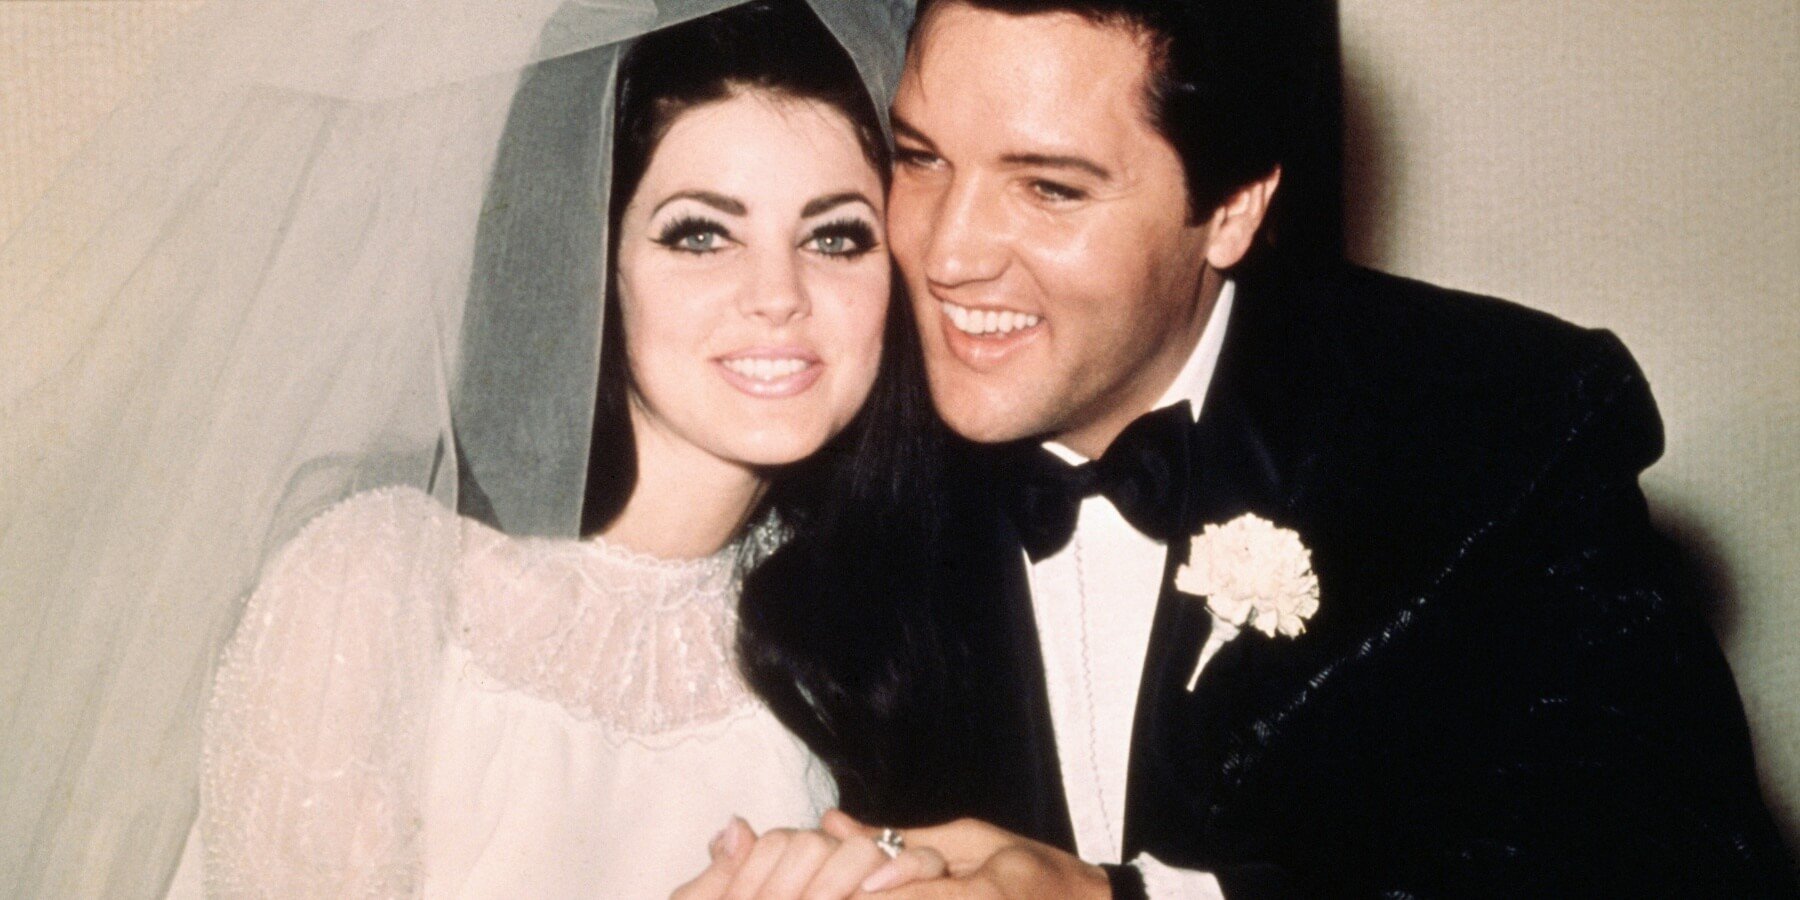 Priscilla Presley and Elvis Presley on thier wedding day on May 1, 1967.